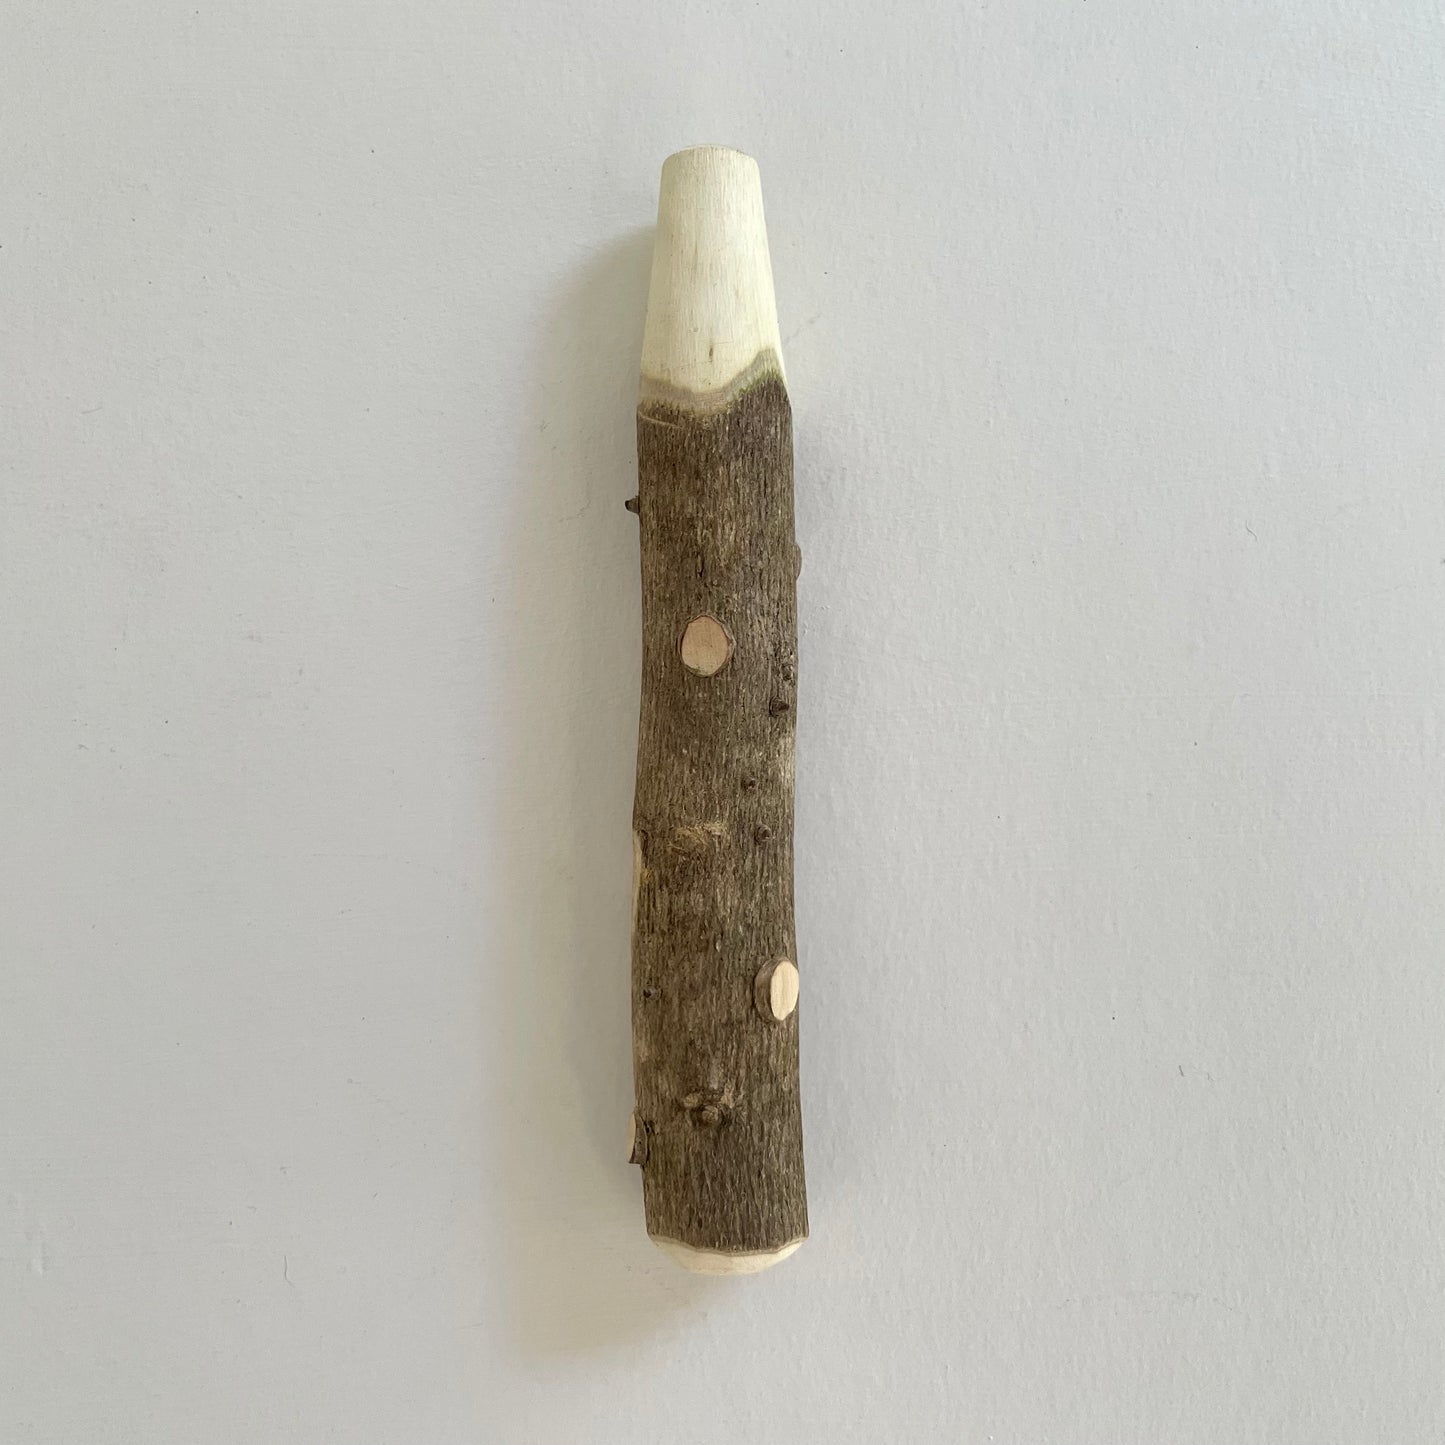 Japanese sancho wood 5 inch twig pestle